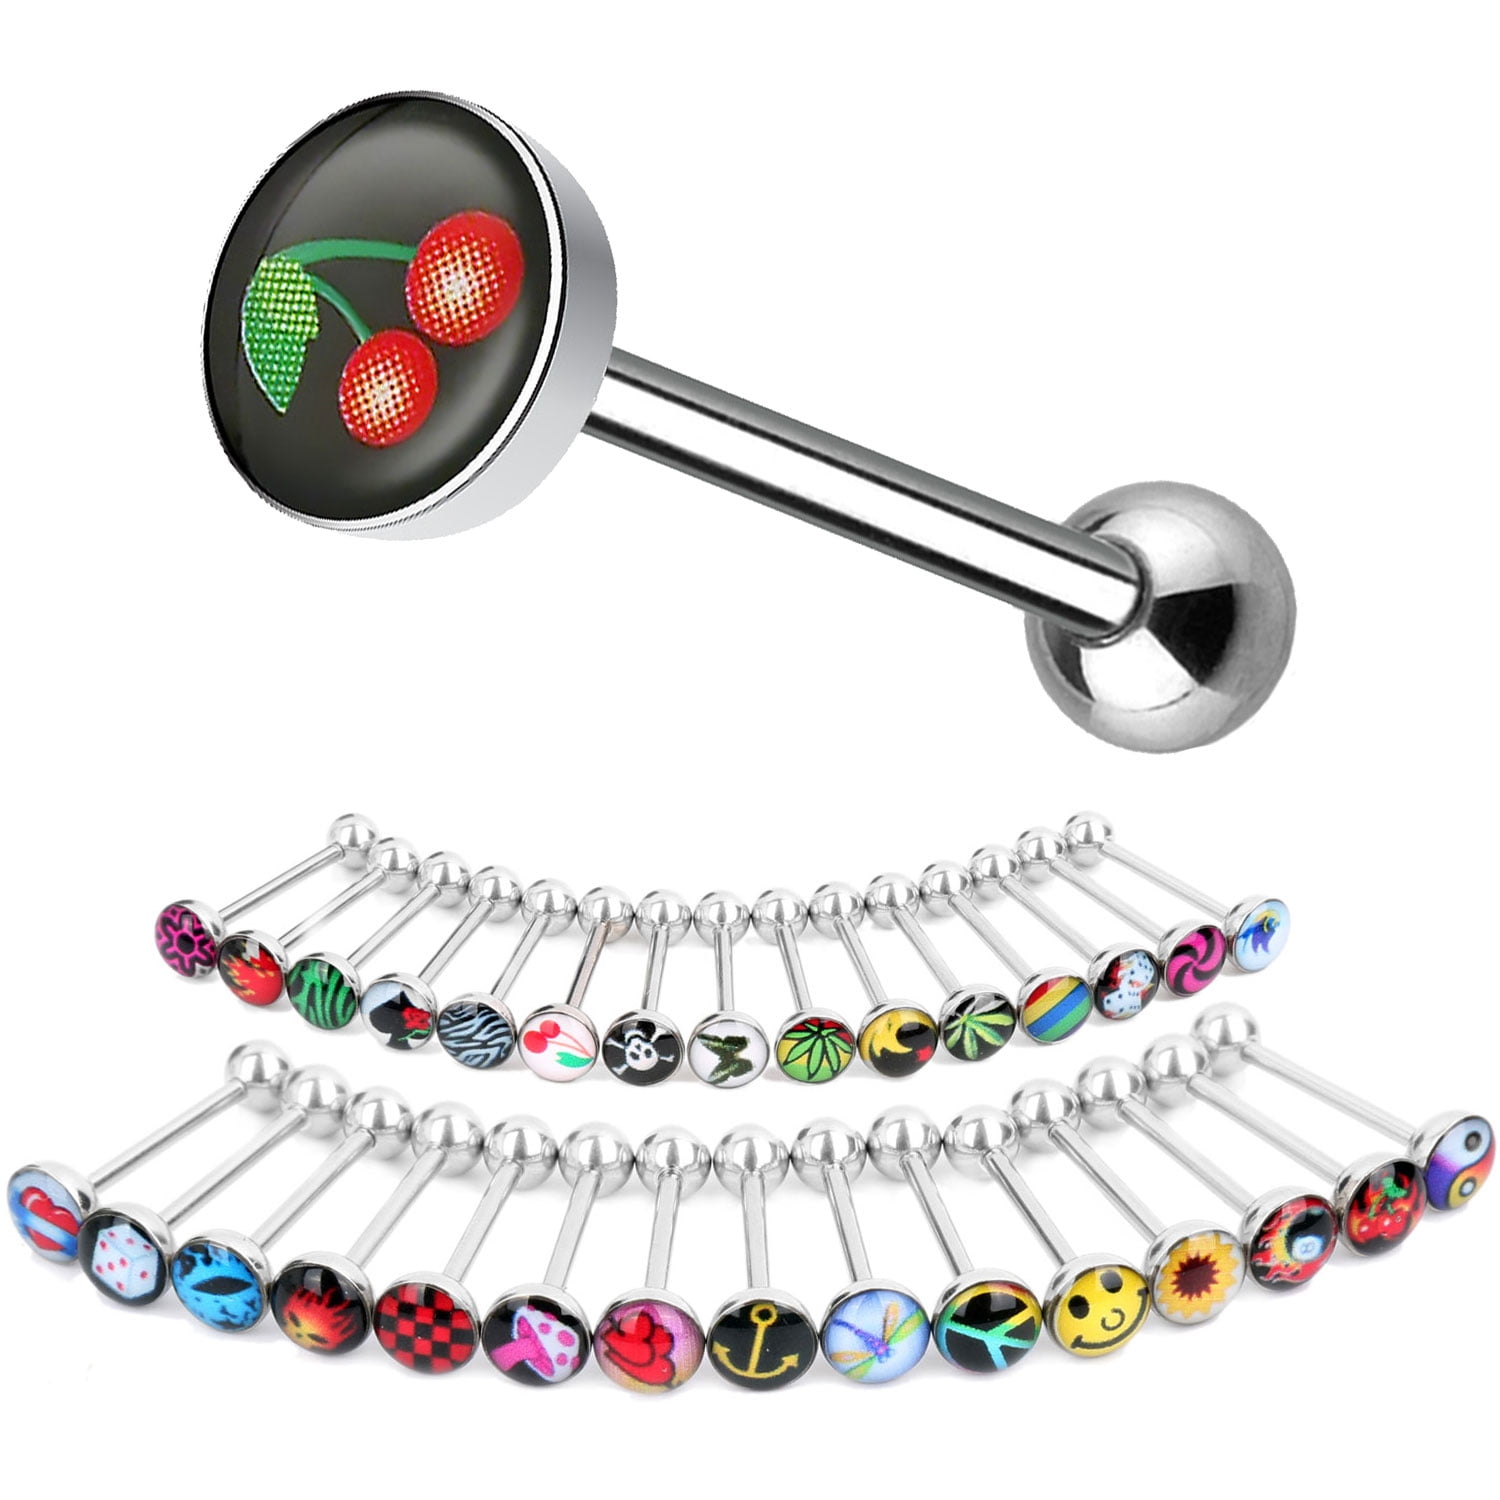 50 Pcs Tongue Ring Nipple Bar Barbell Body Piercing Jewelry Mixed Color 